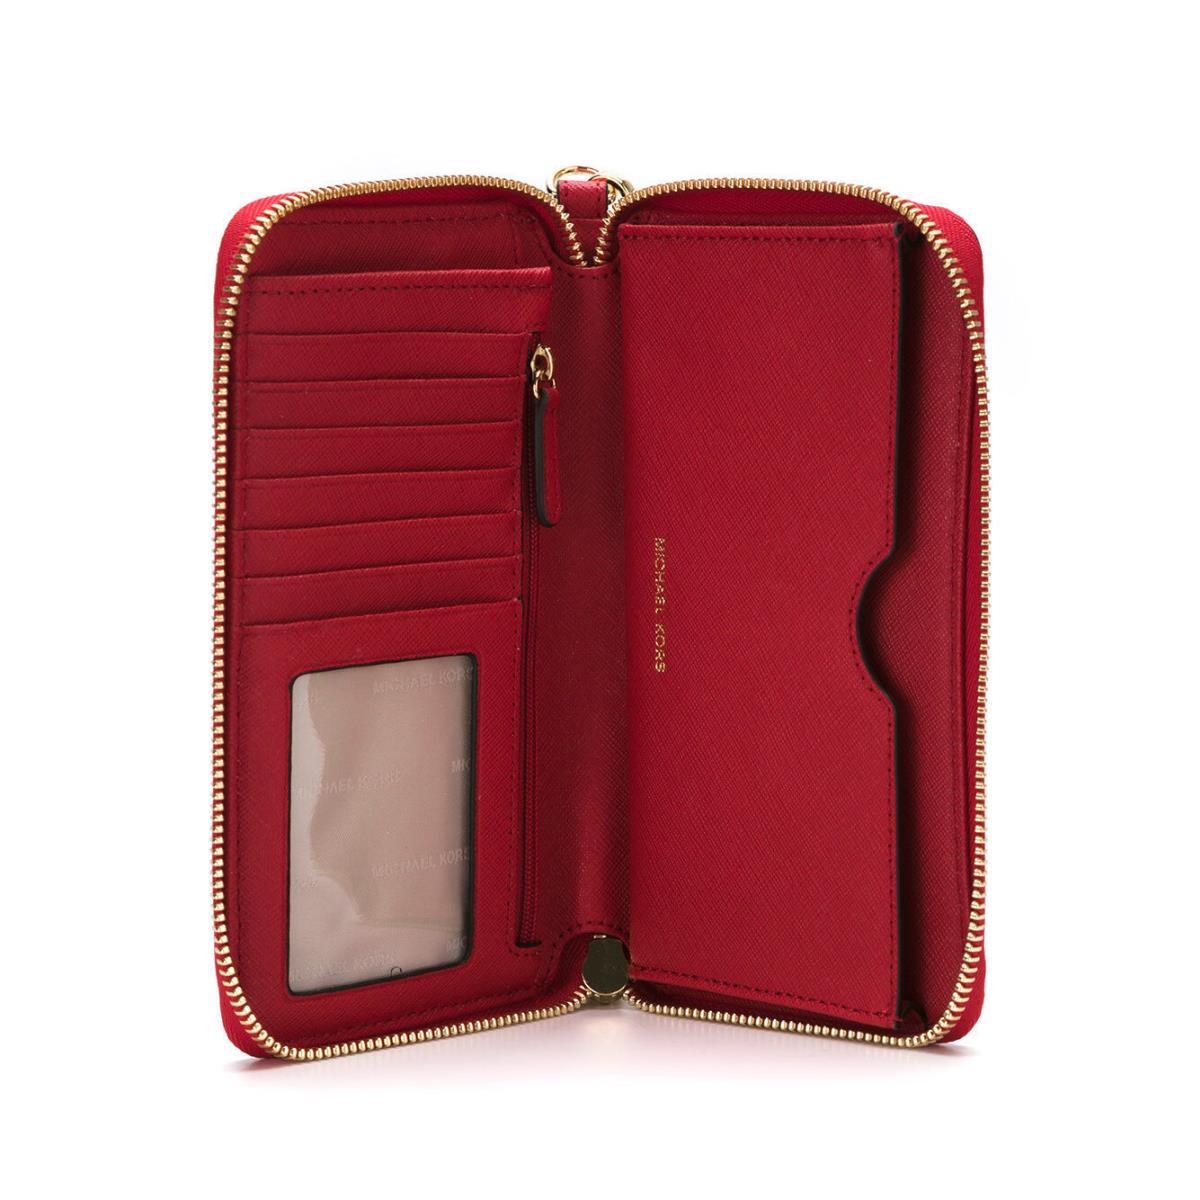 Michael Kors wallet  - Red 0